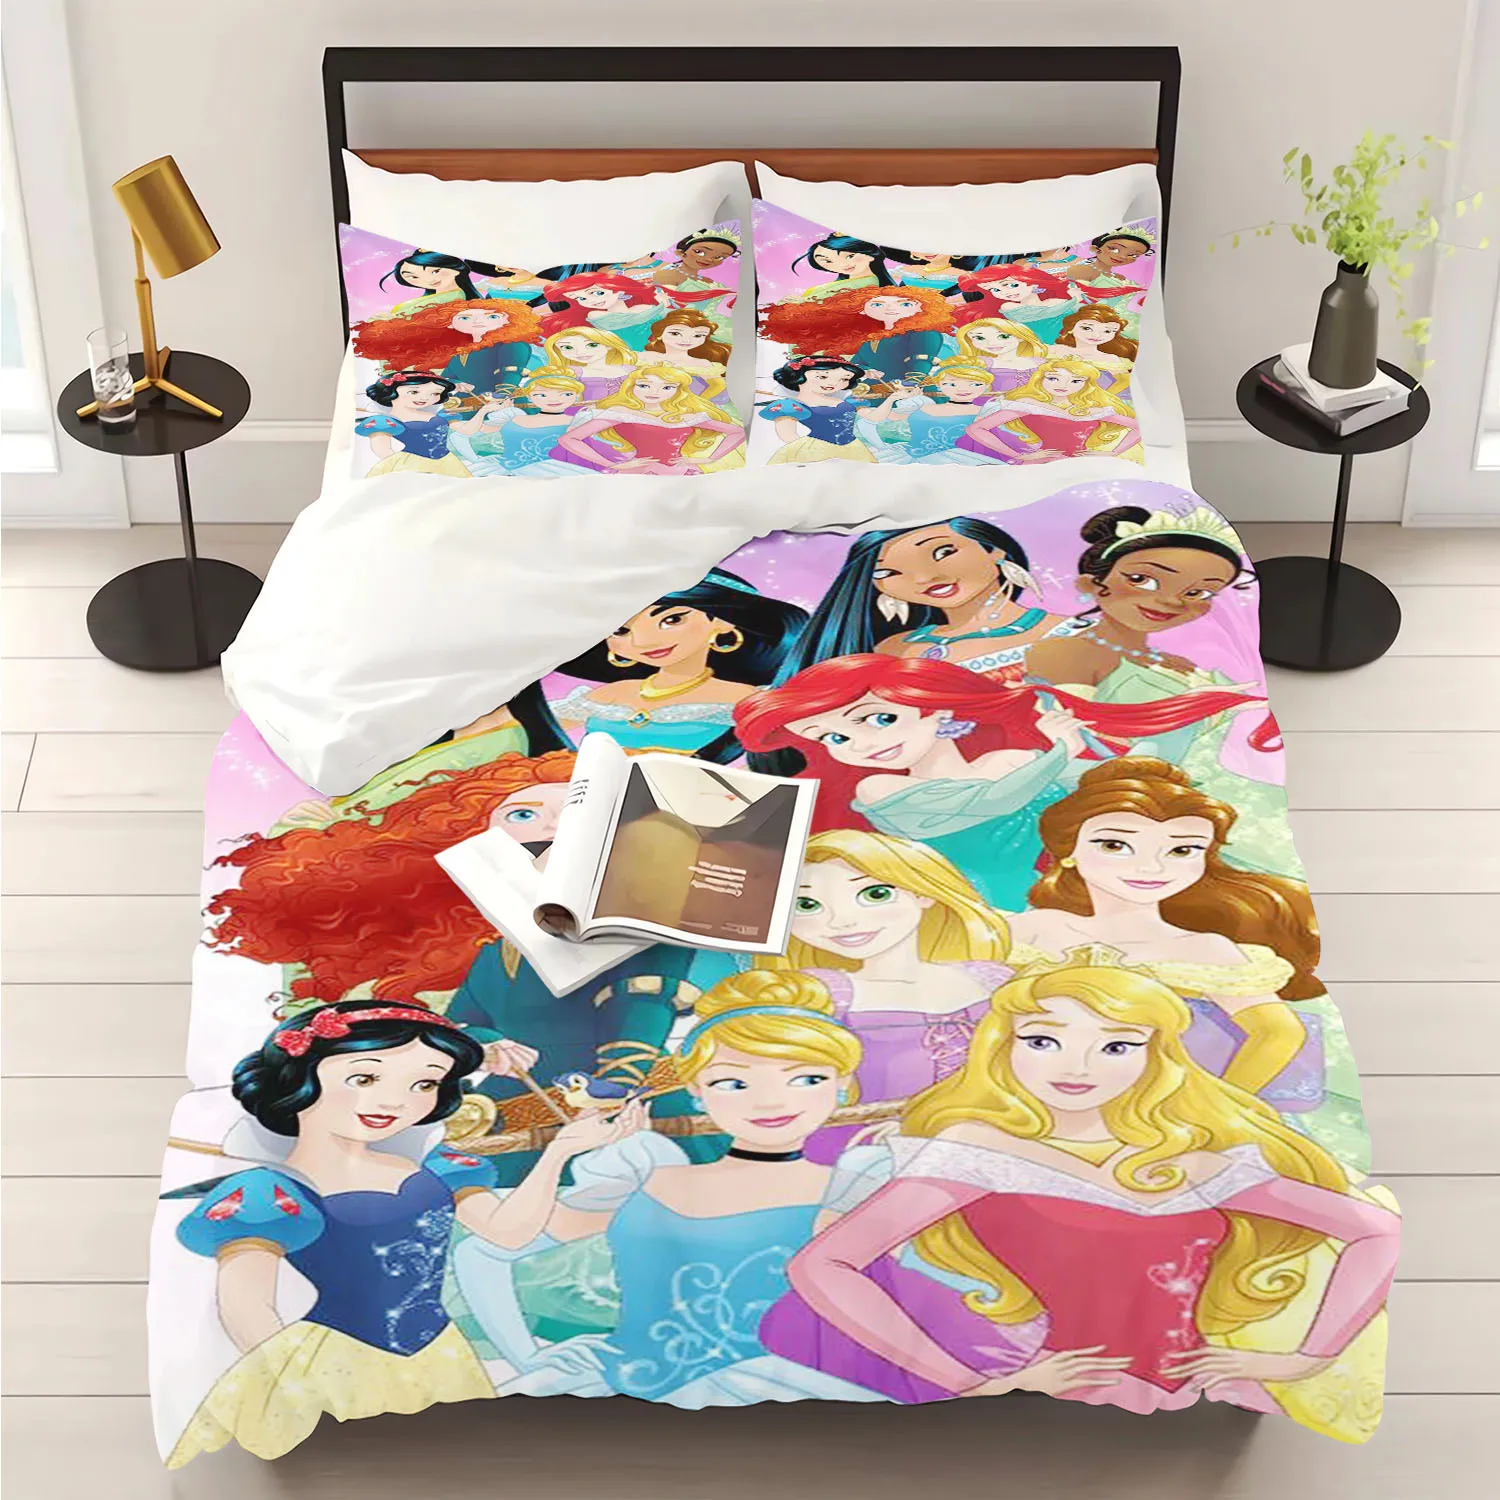 

Disney Princess Series Printed Duvet Cover Set Bedding Room Decor Anime Home Decor 3d Children'S Bedding Set With Pillowcase